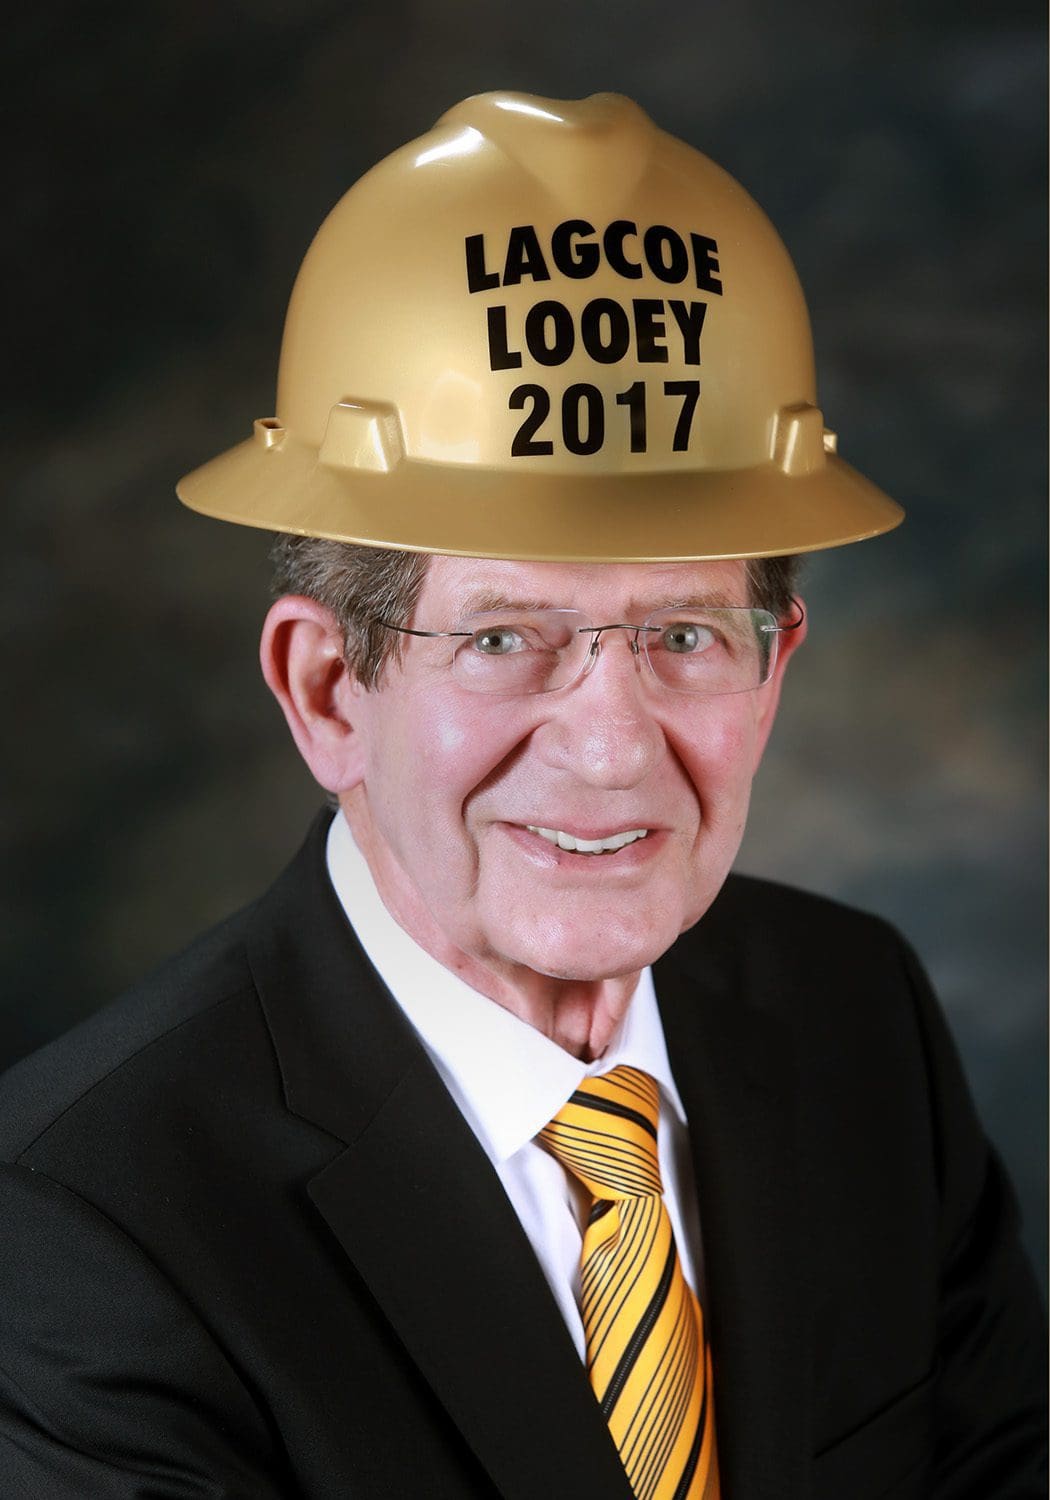 LAGCOE NAMES DON BRIGGS AS LAGCOE LOOEY 2017